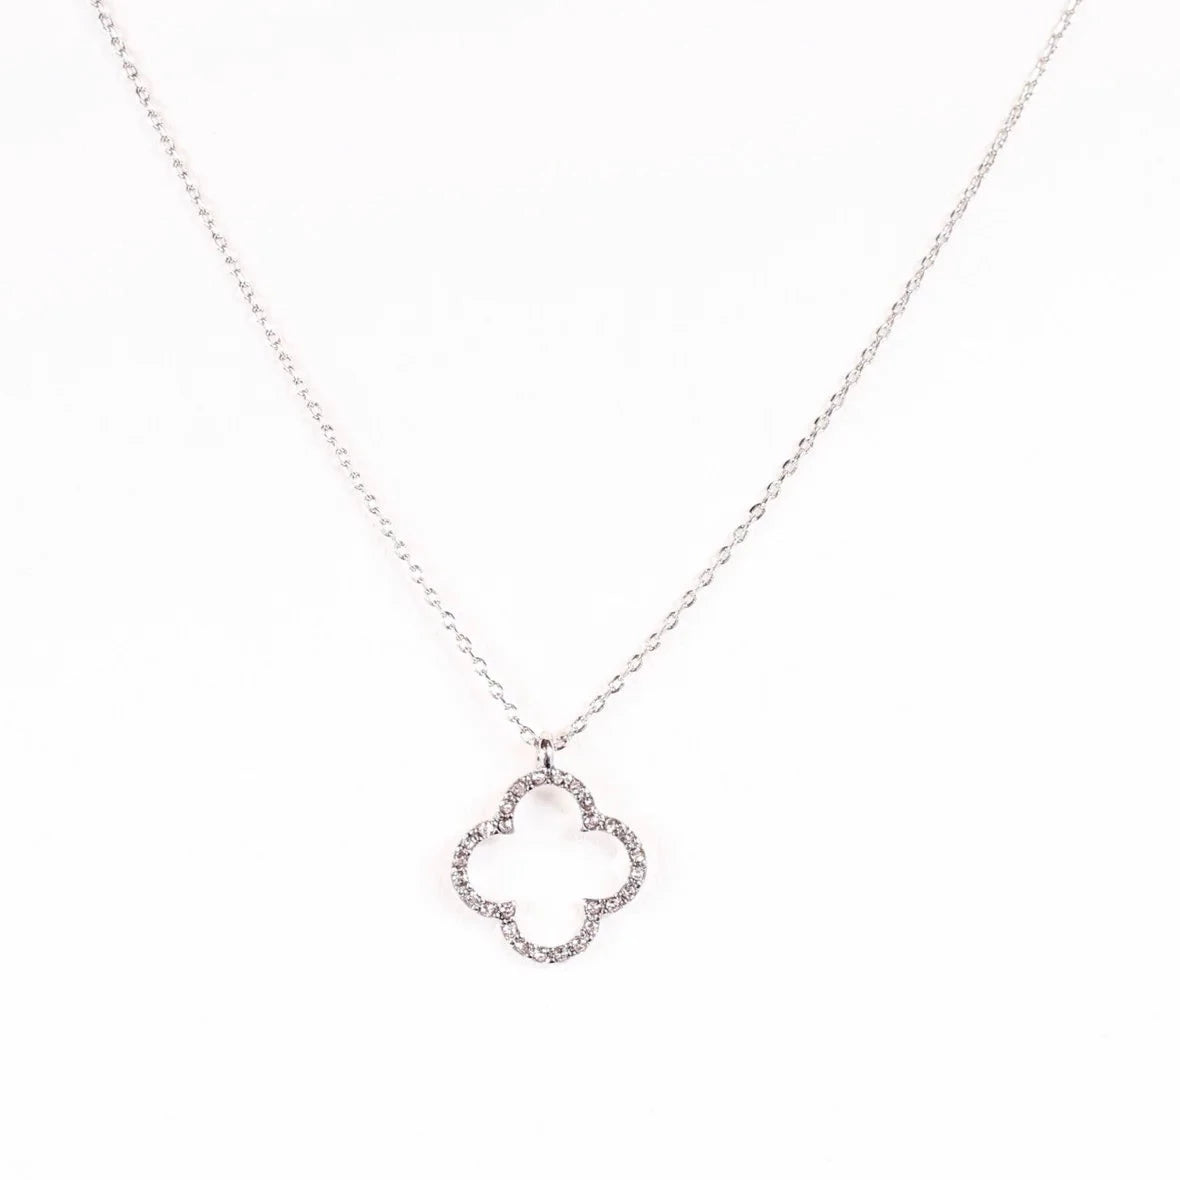 Linus Open Clover Necklace Silver-Necklaces-Caroline Hill-LouisGeorge Boutique, Women’s Fashion Boutique Located in Trussville, Alabama